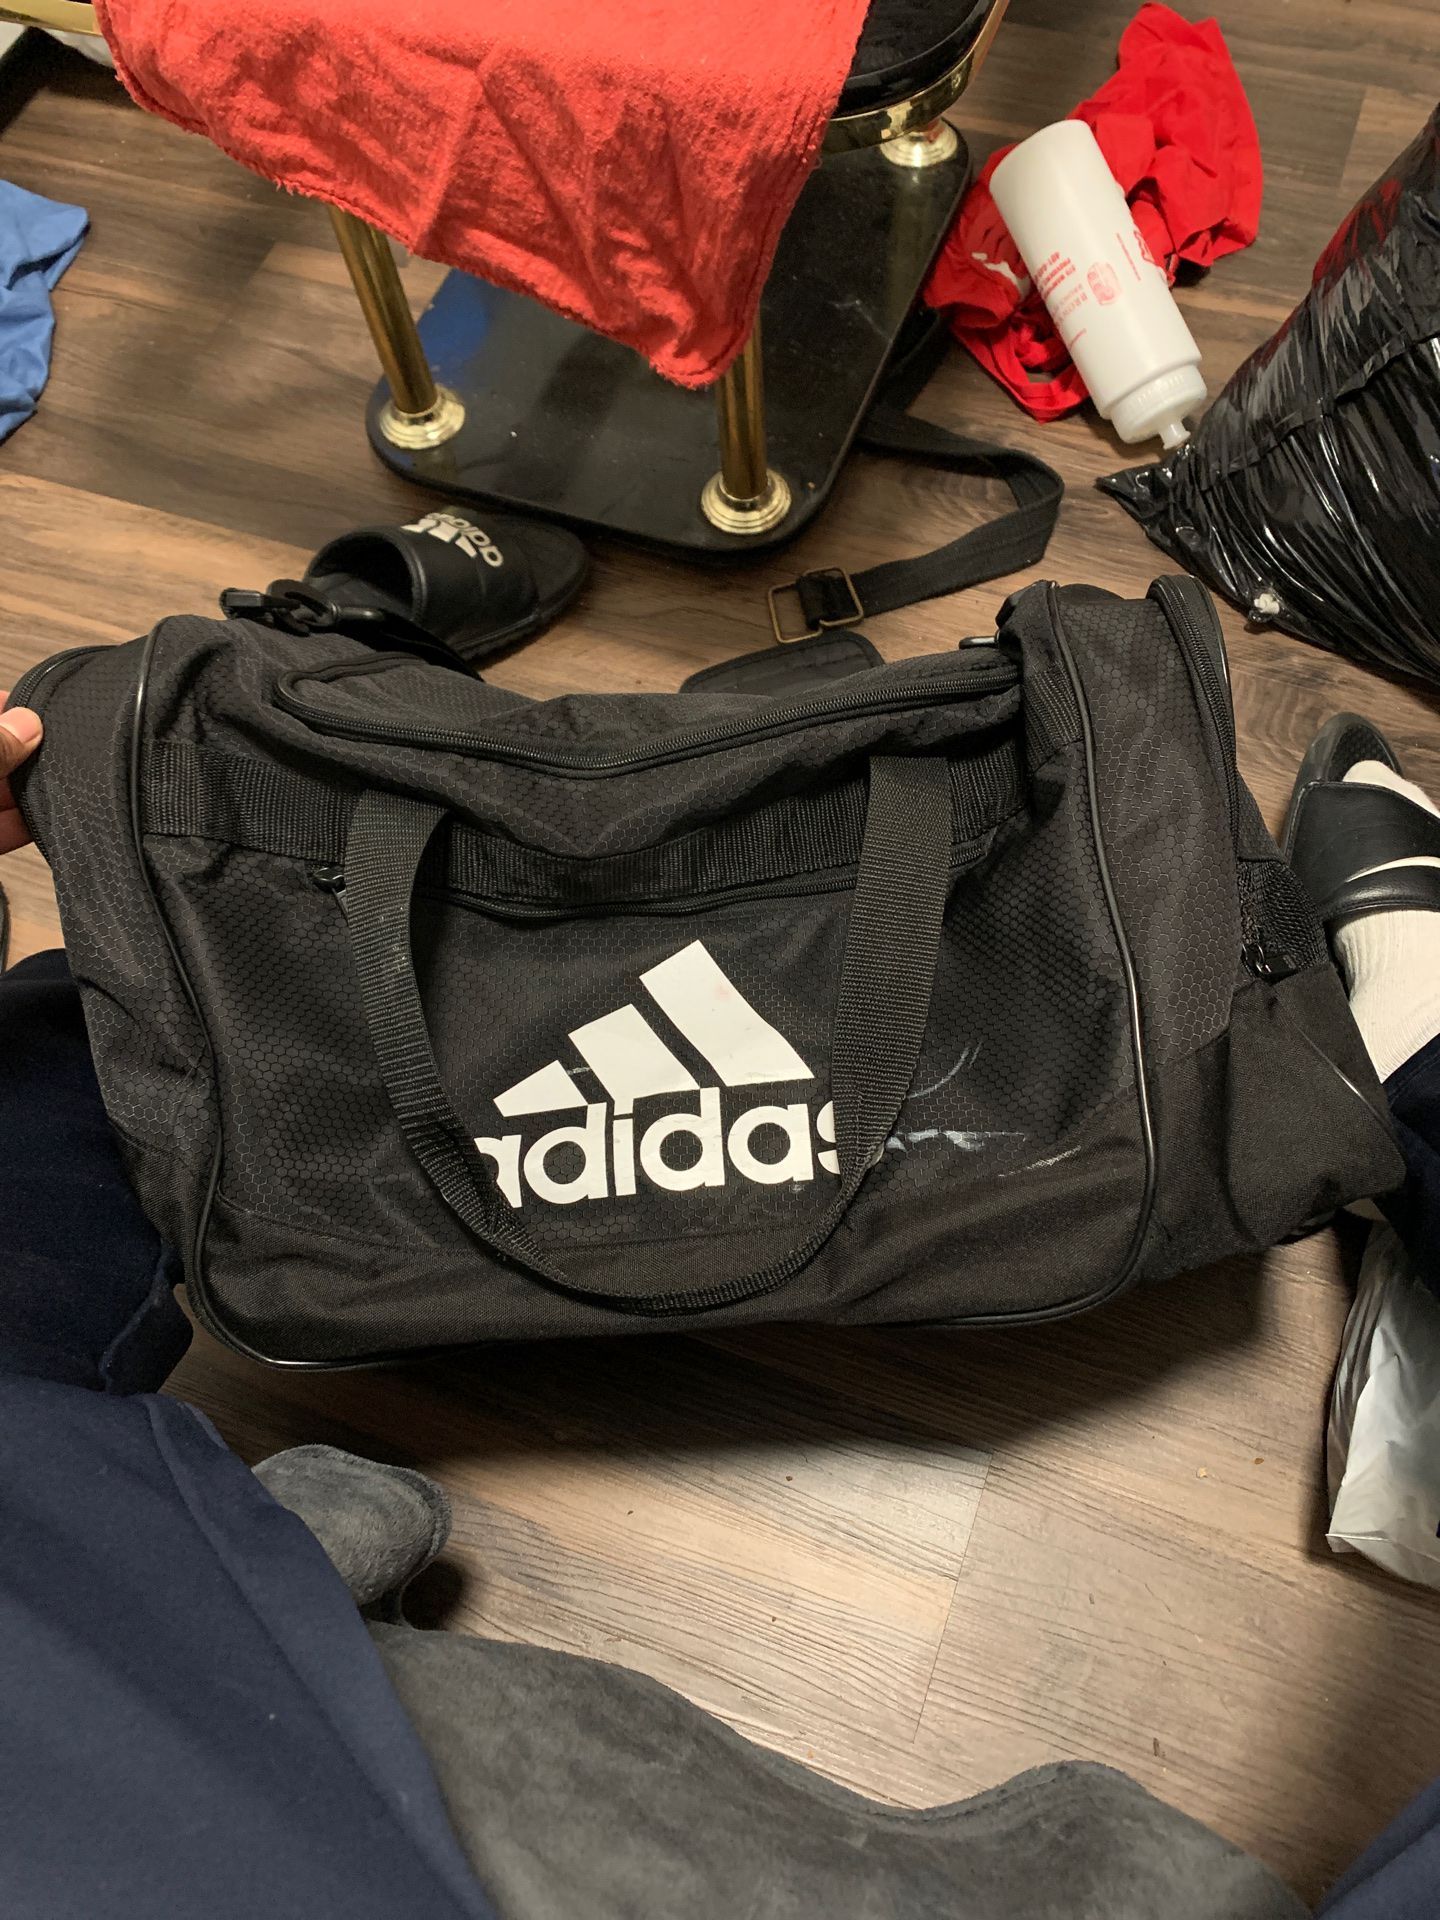 Adidas sports duffle bag